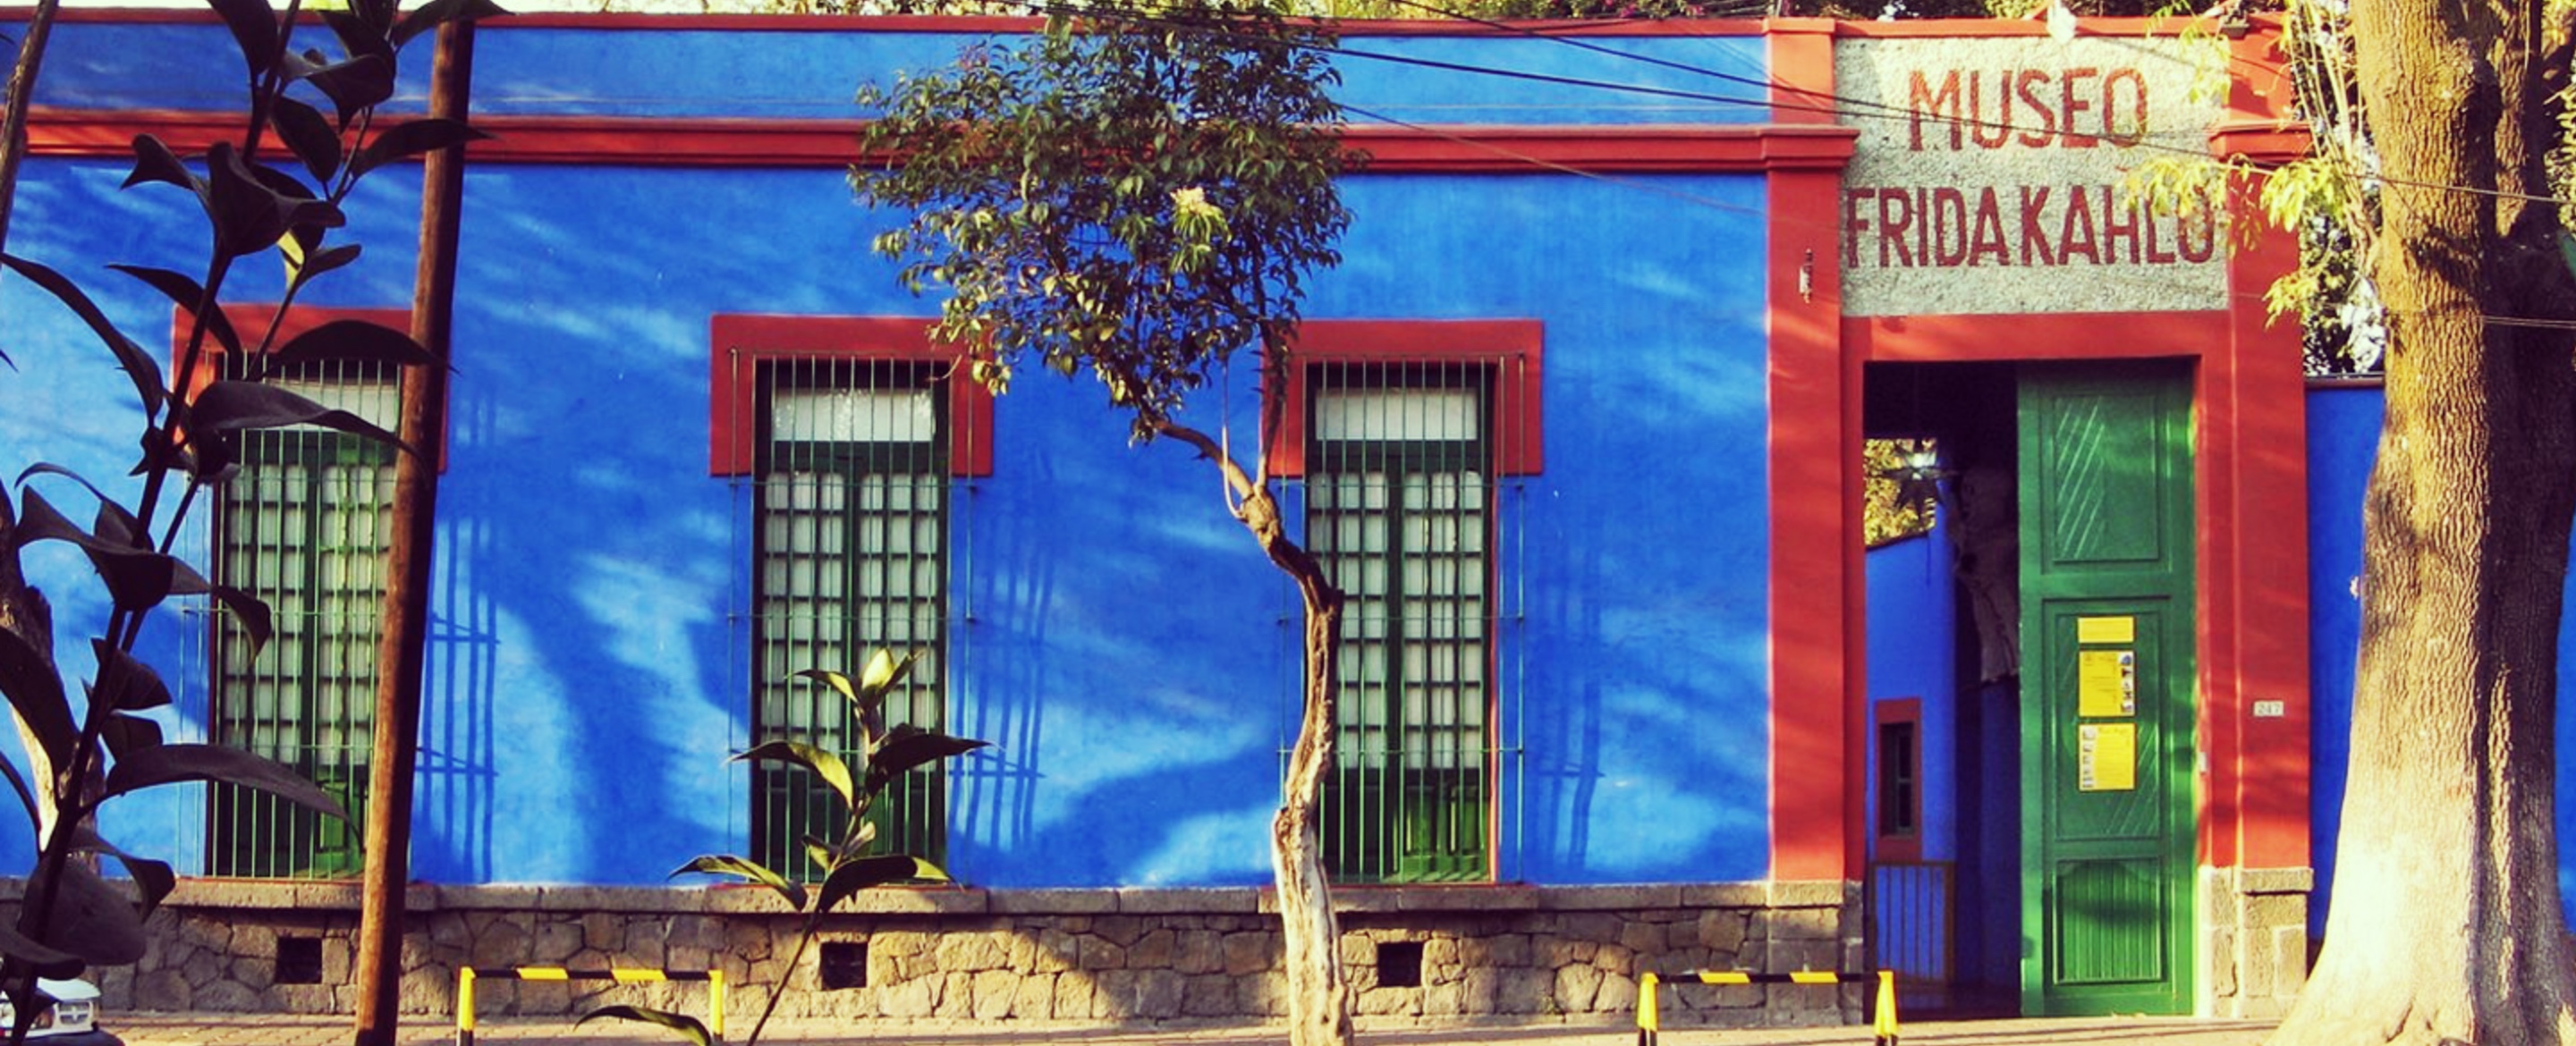 Casa Azul: a glimpse into Frida Kahlo's world – Museeum